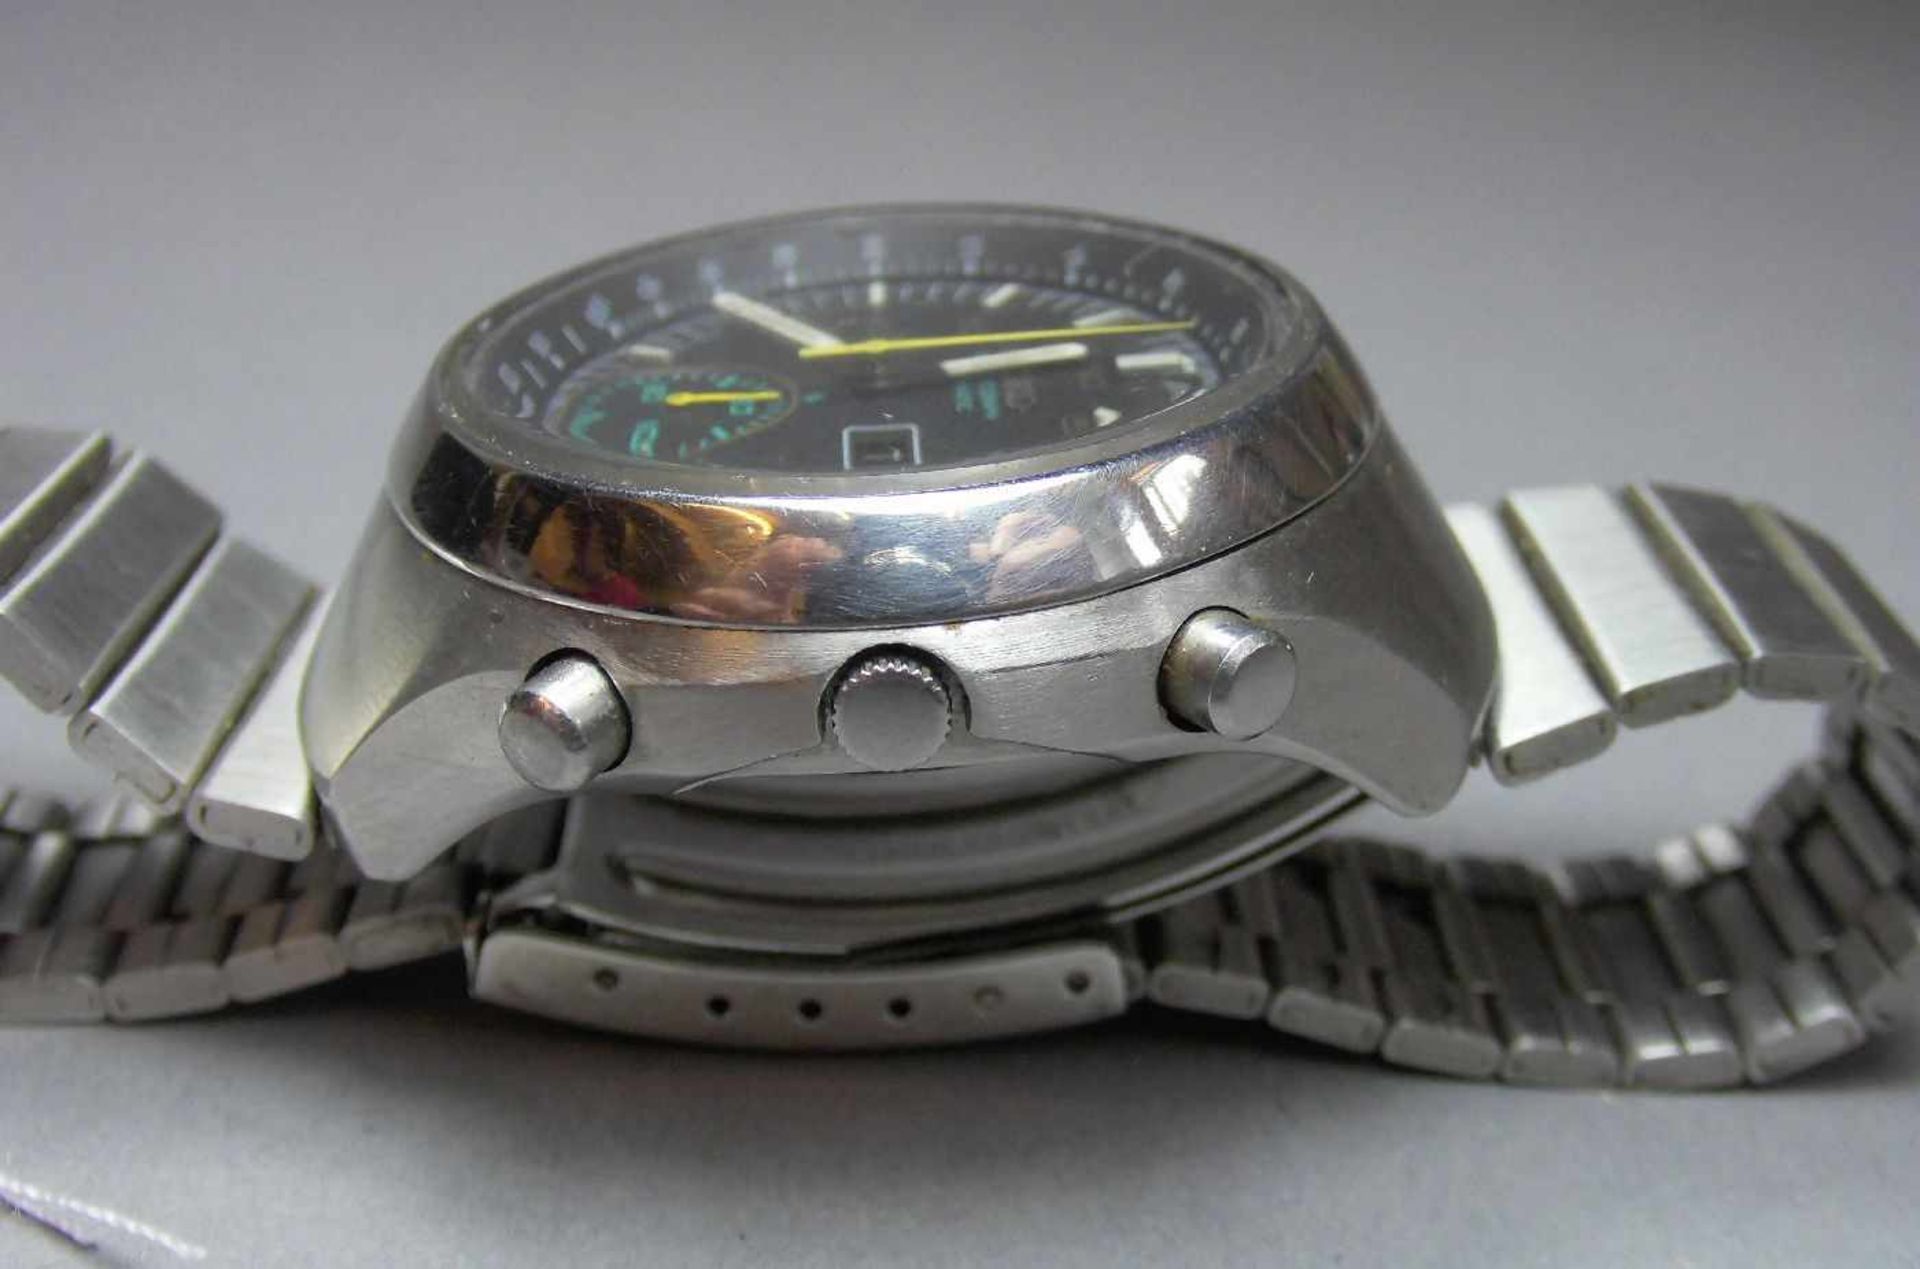 VINTAGE CHRONOGRAPH / ARMBANDUHR : SEIKO - 6139 - 7160 T / wristwatch, Japan, 1970er Jahre, - Image 6 of 8